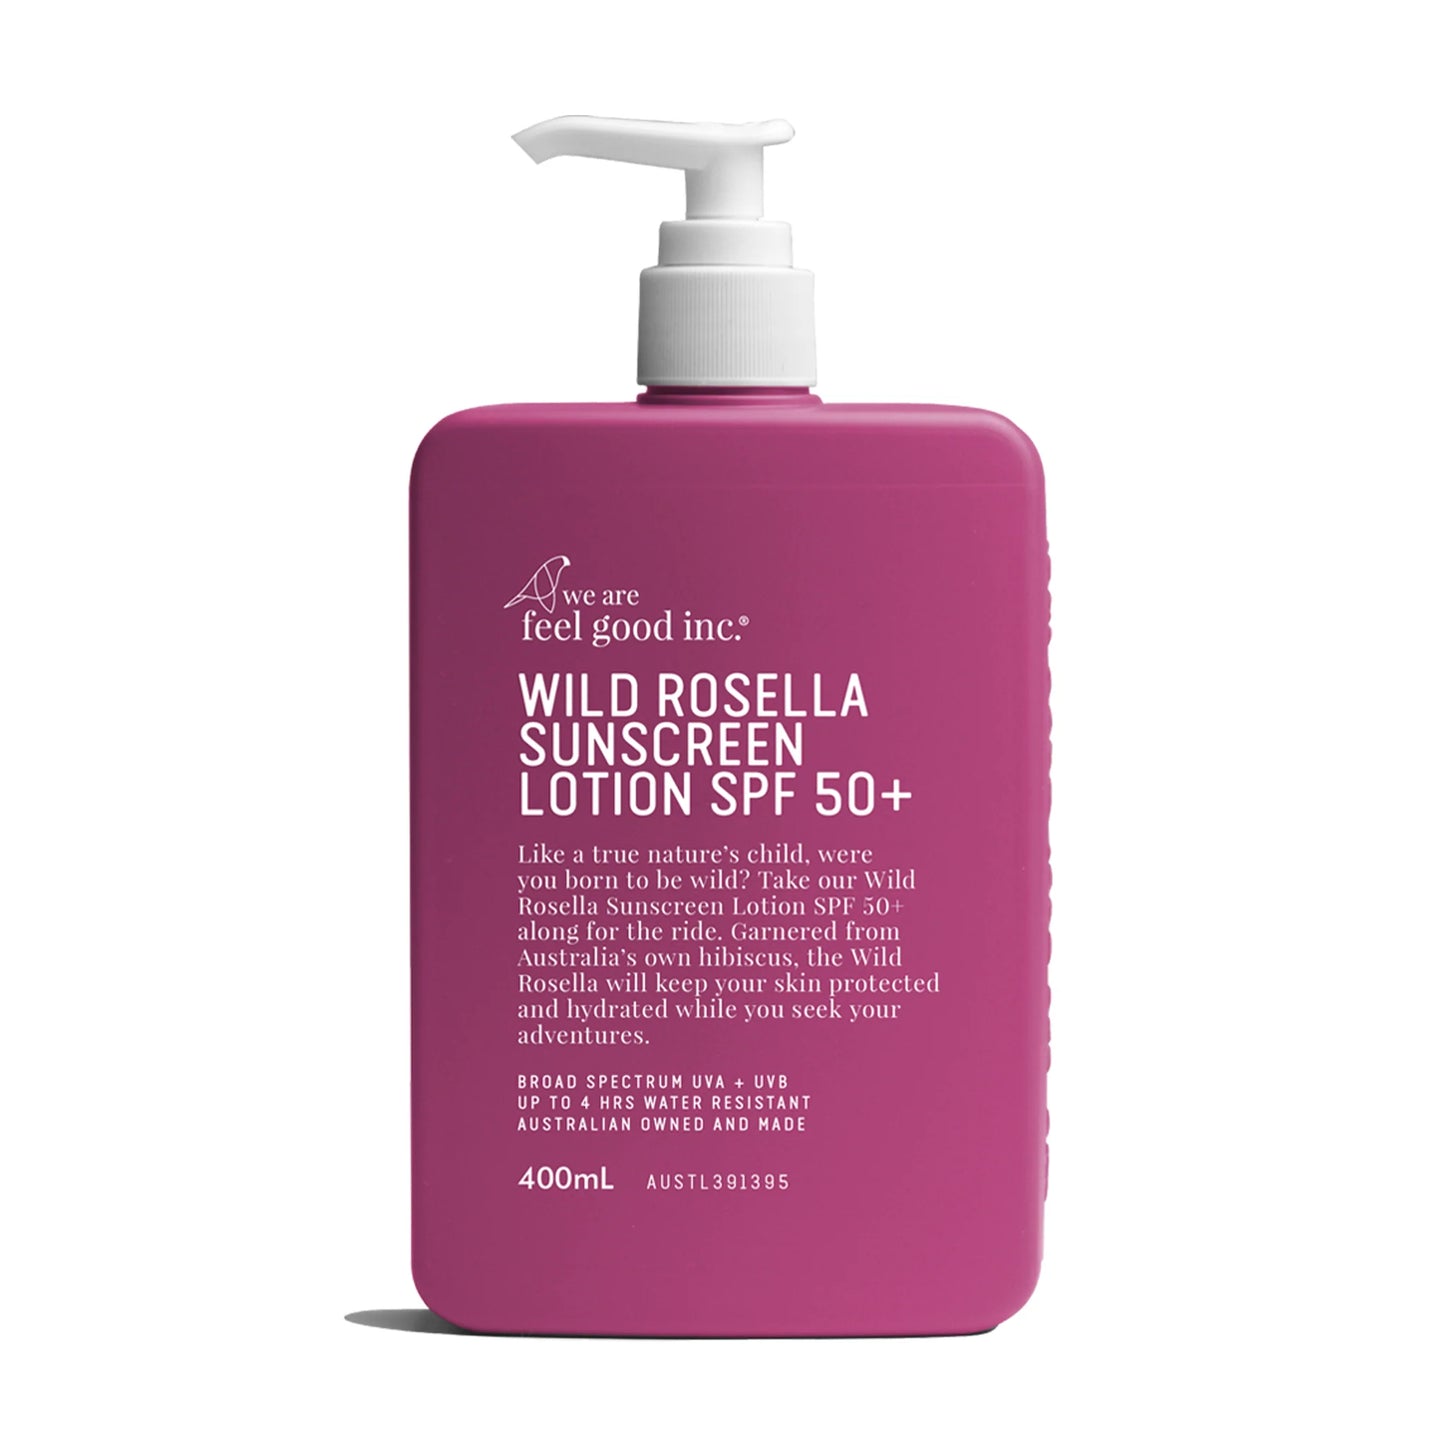 Wild Rosella Sunscreen SPF 50+ - We Are Feel Good Inc.